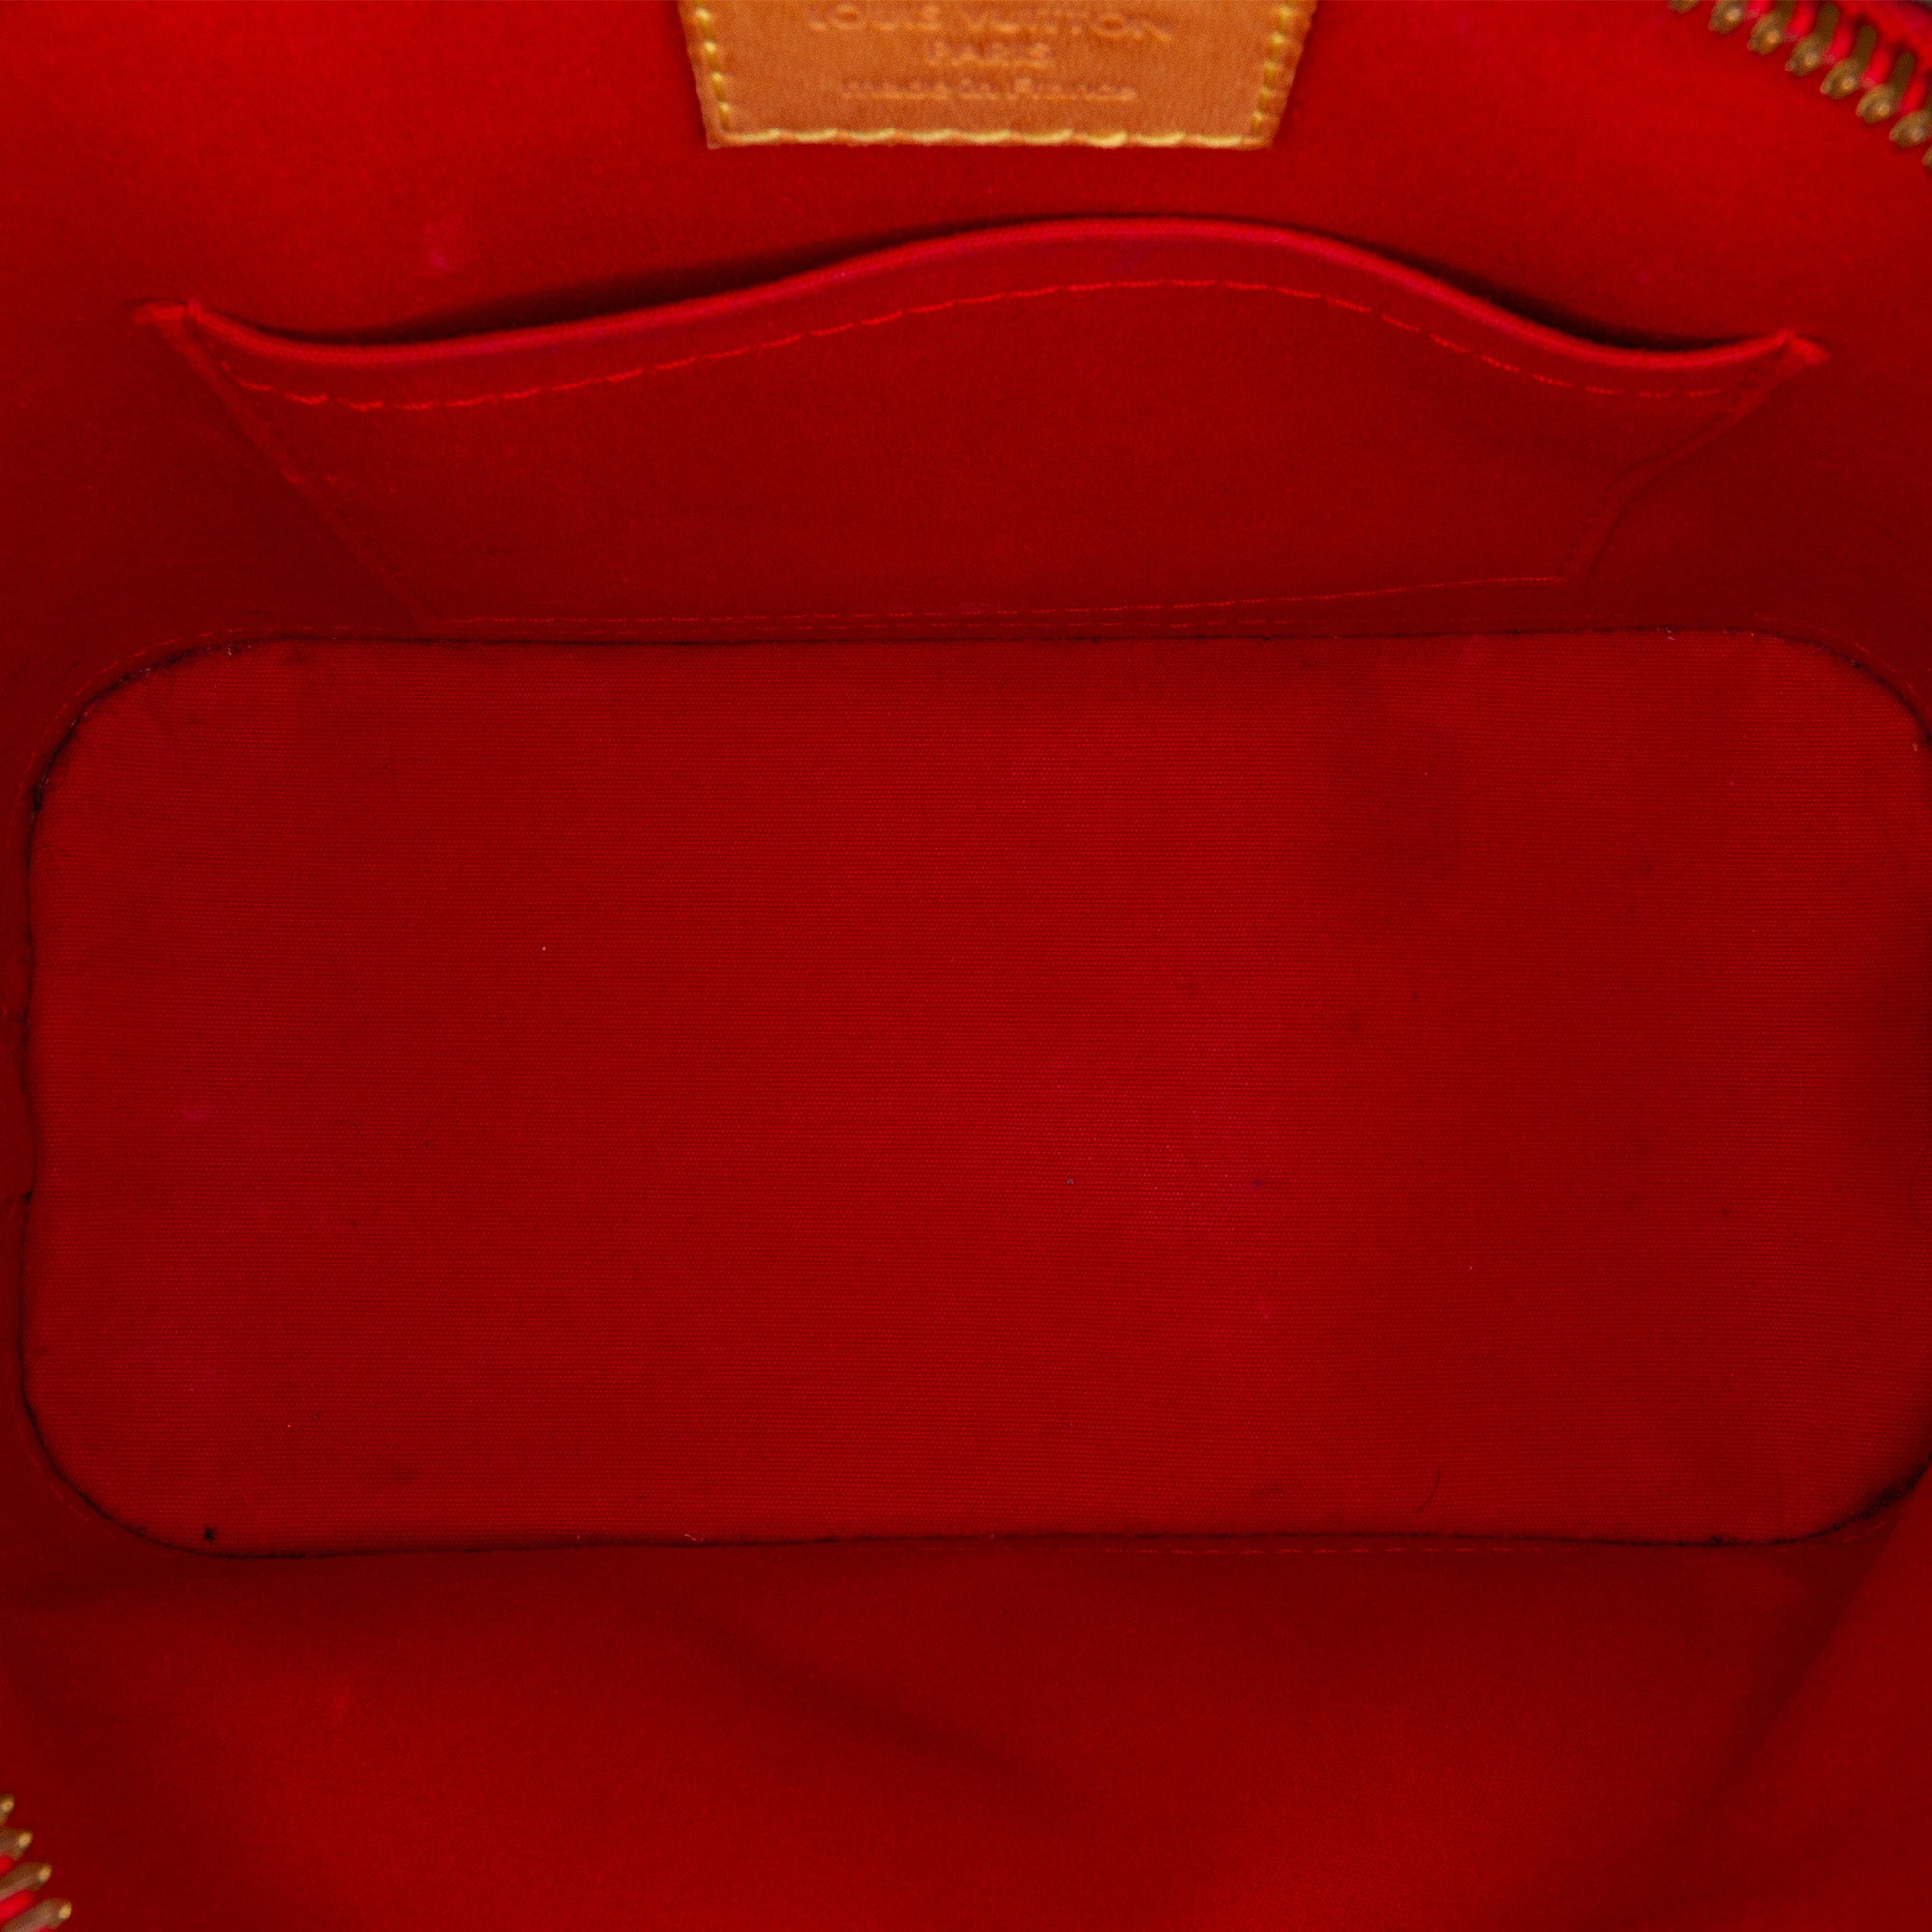 Louis Vuitton Alma BB Red Vernis